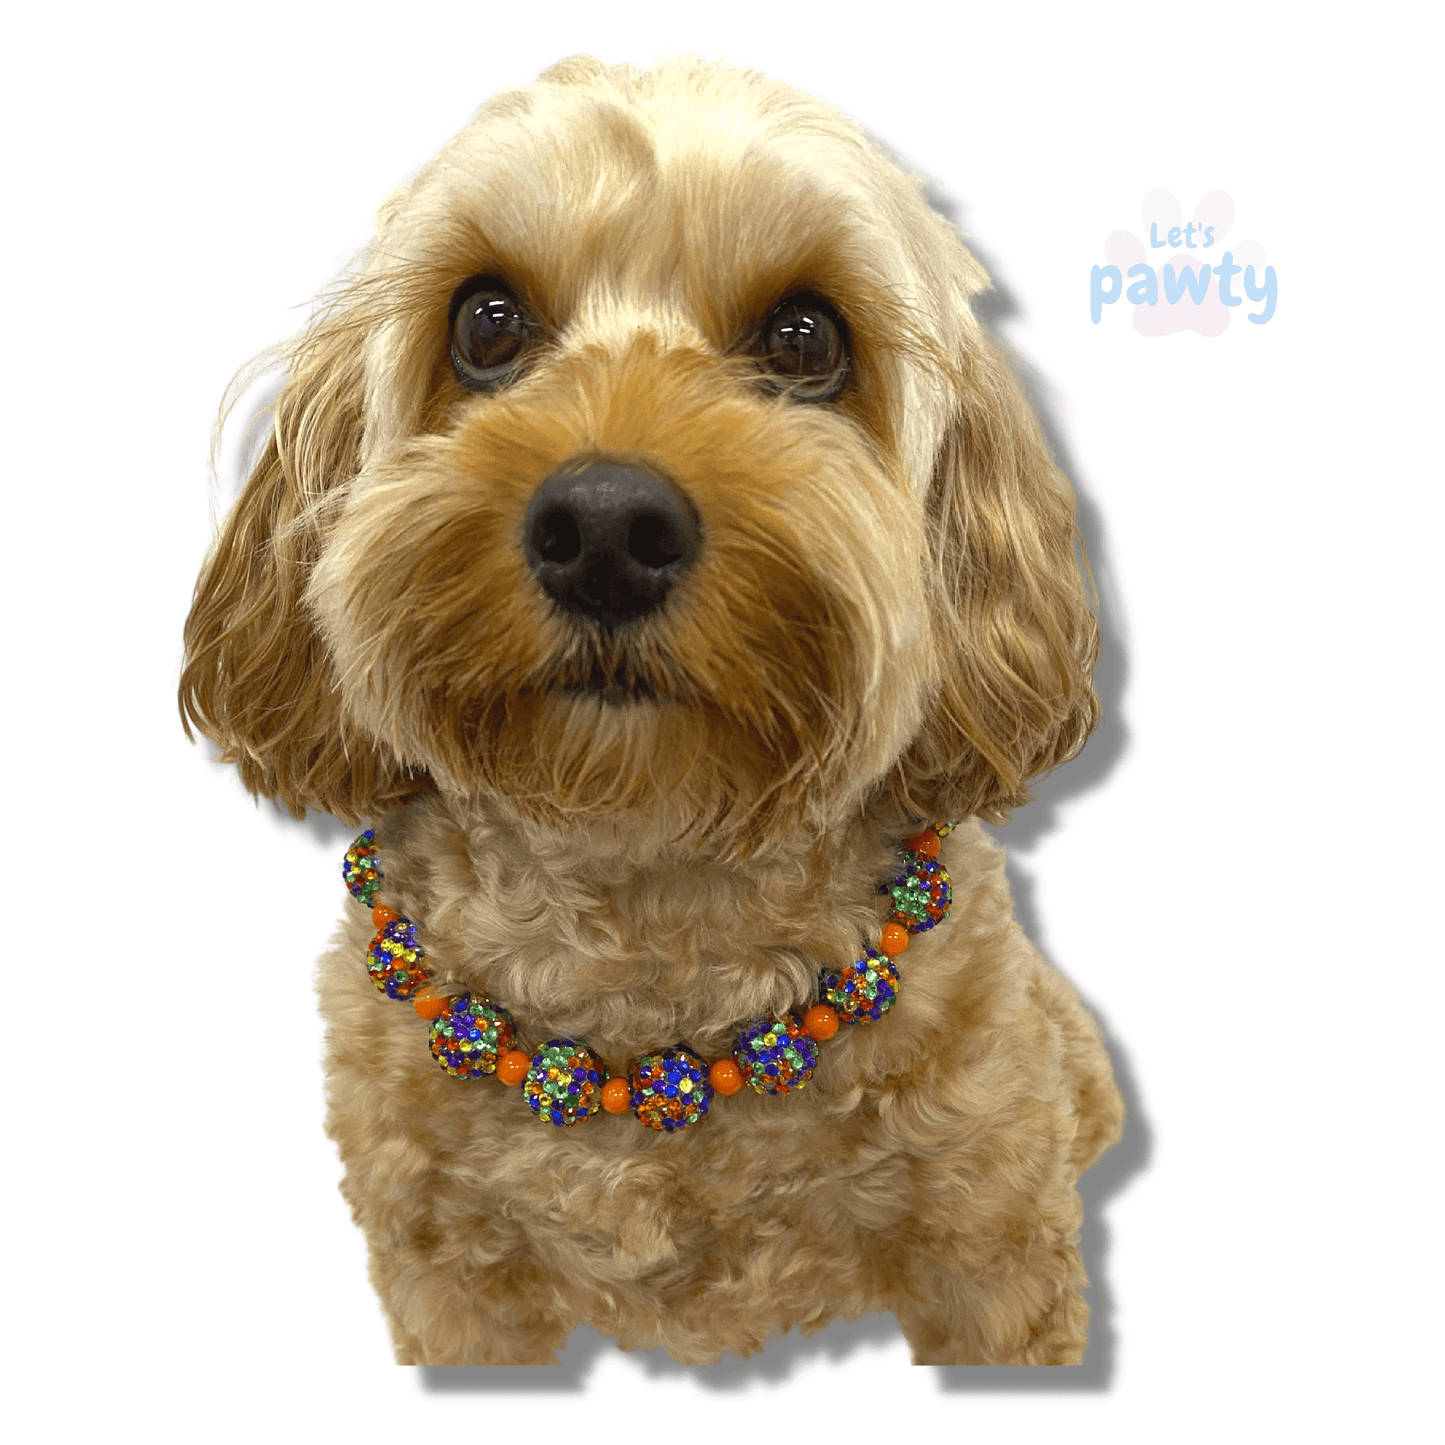 Rainbow dog jewellery fashion accessory let's pawty 